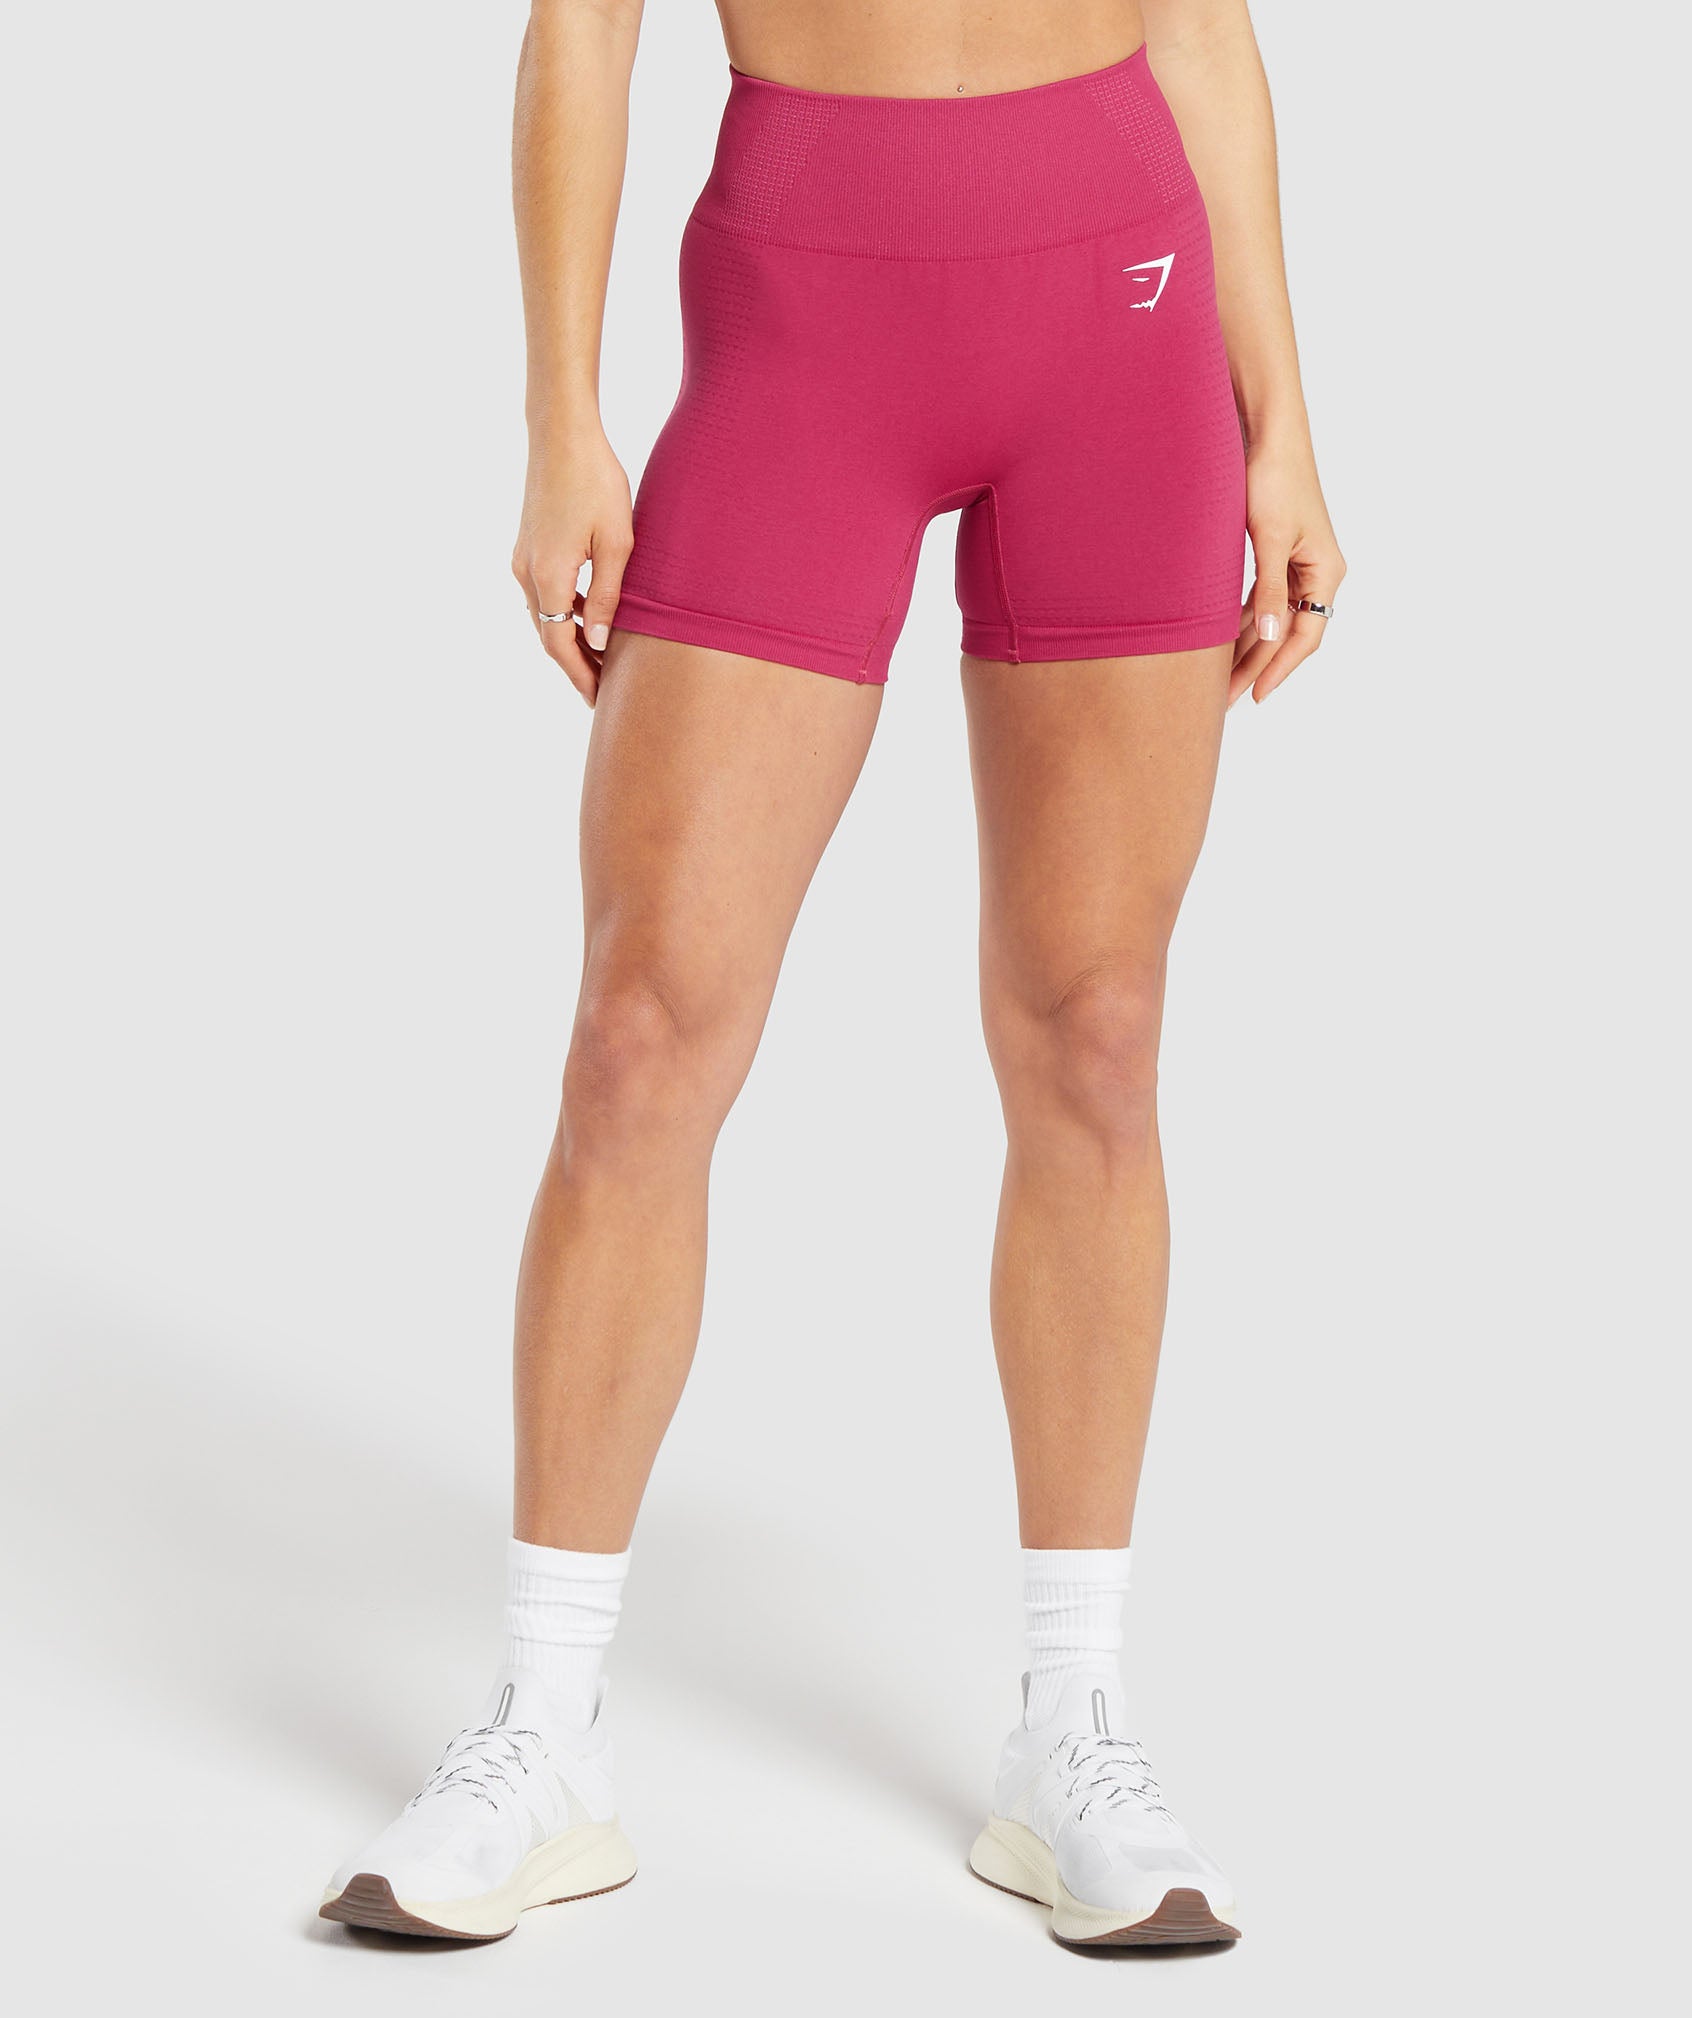 Vital Seamless 2.0 Shorts in Vintage Pink/Marl